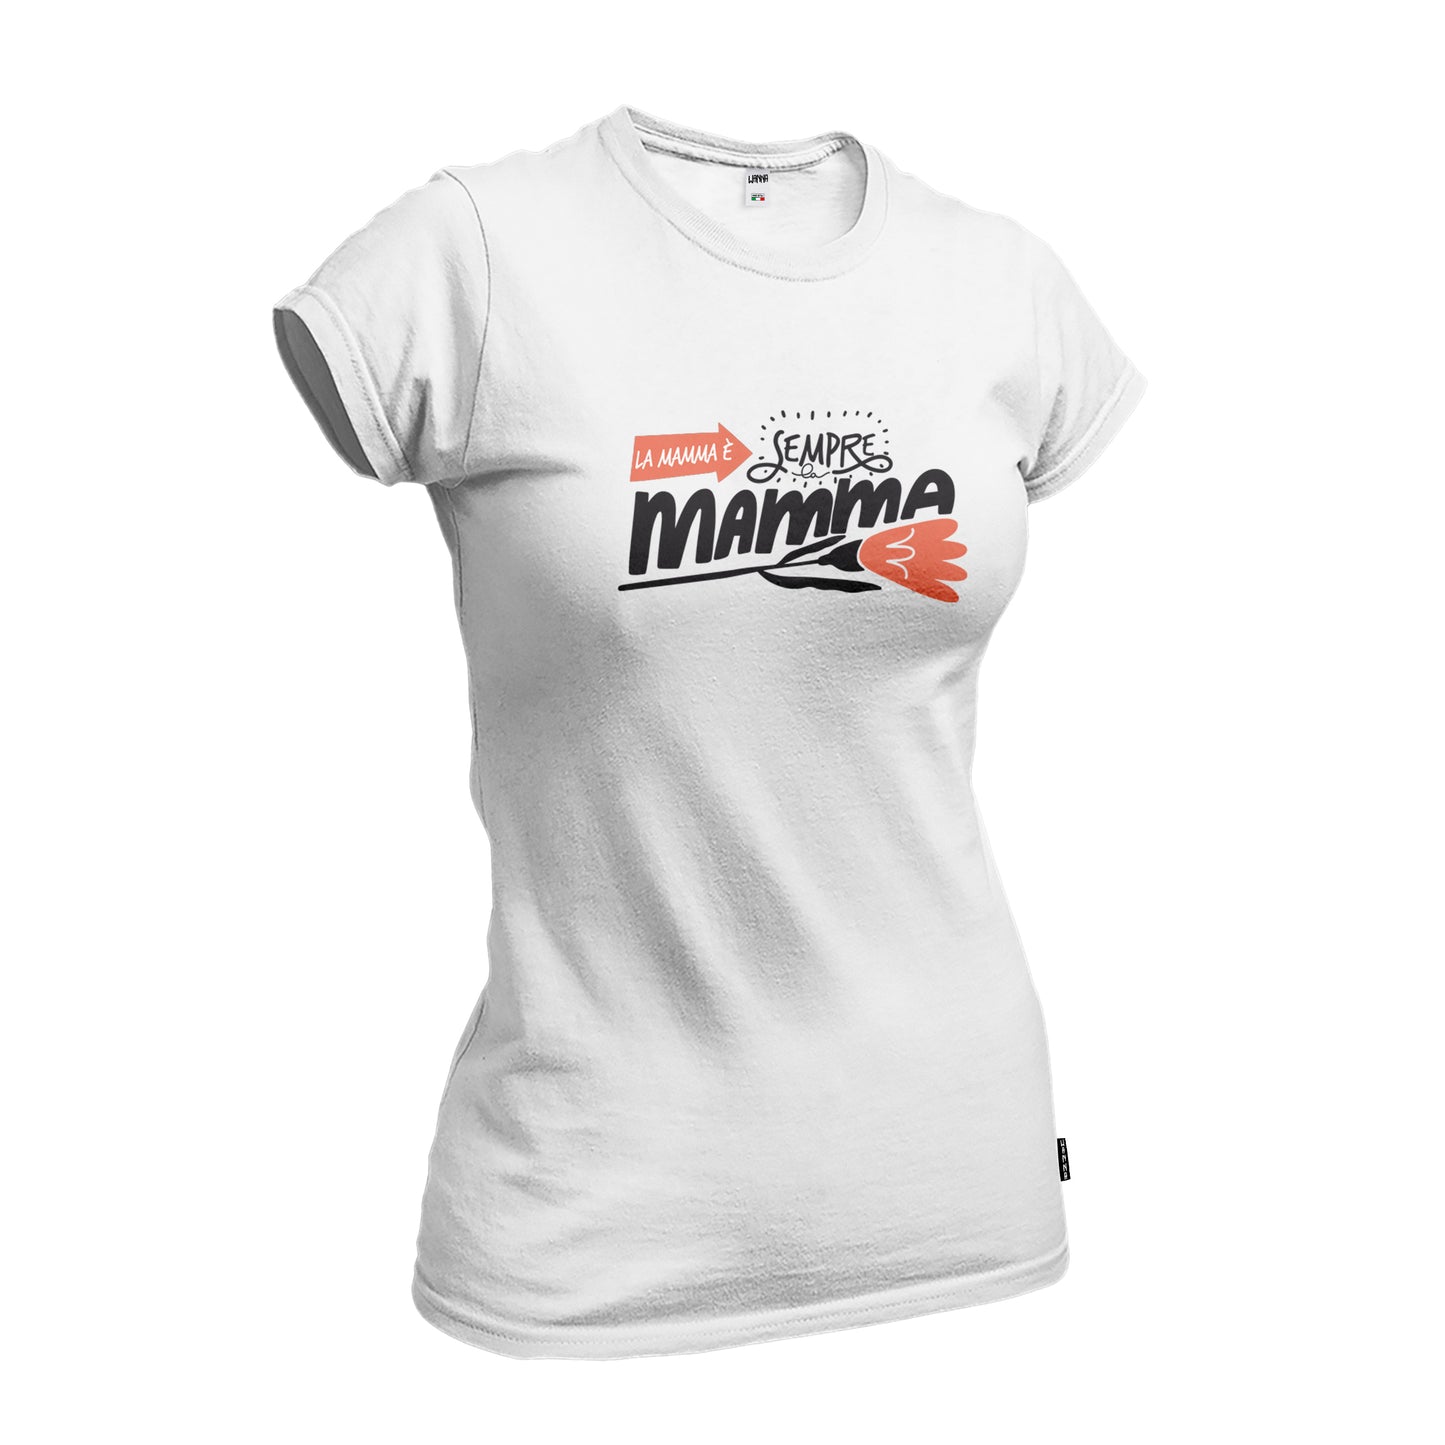 Mamma - T-Shirt